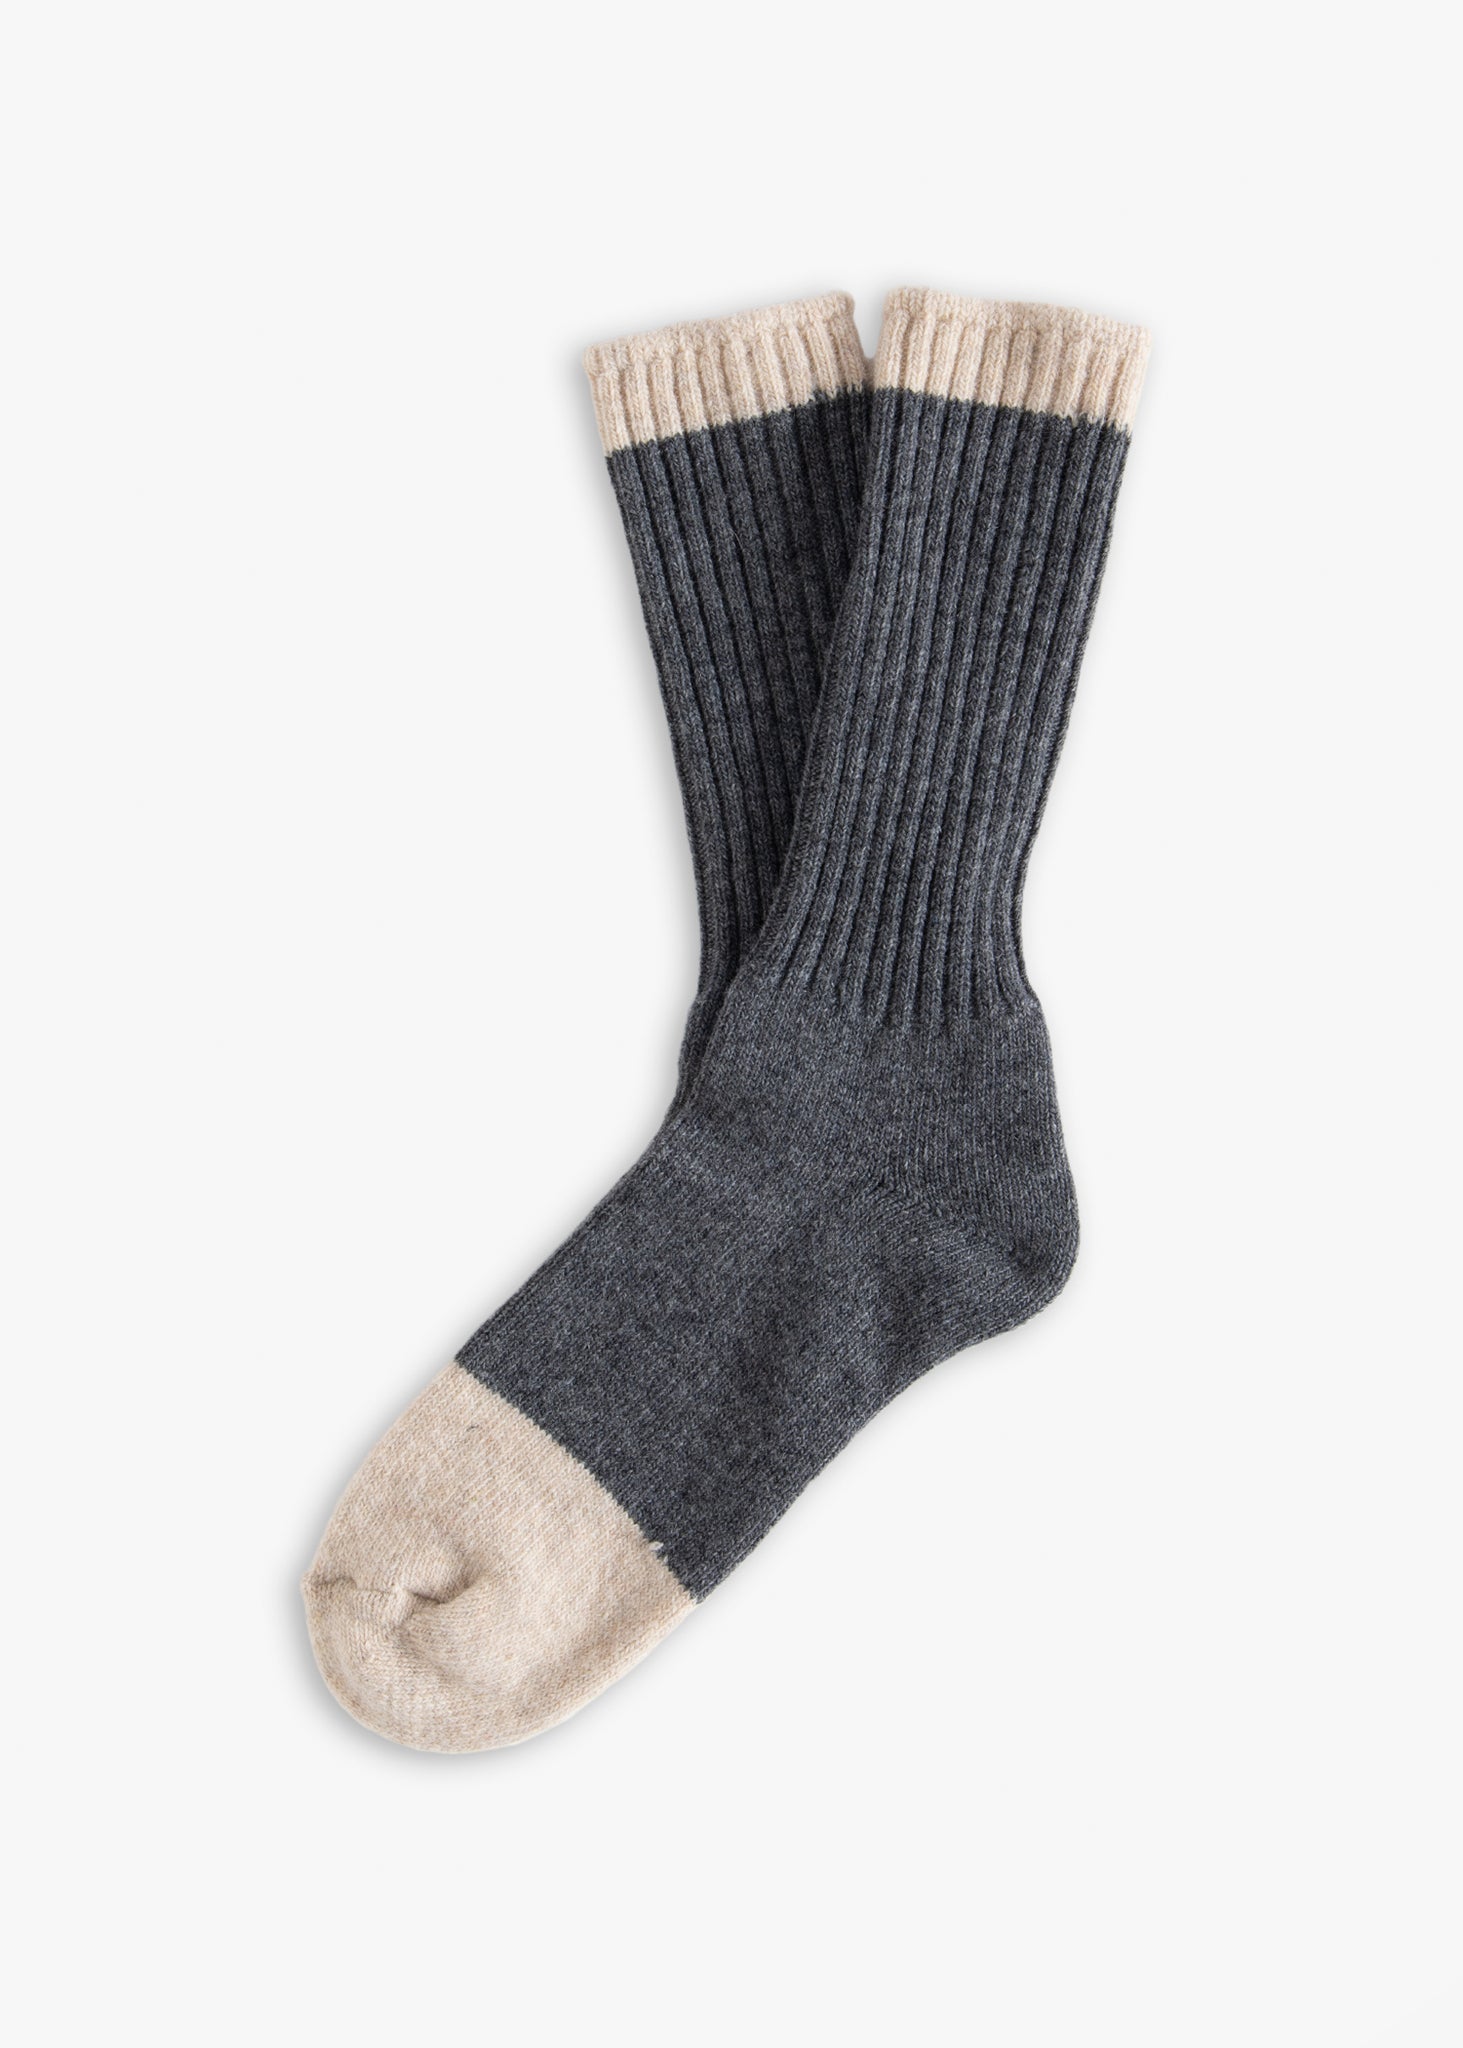 Thunders Love Wool Grey Socks